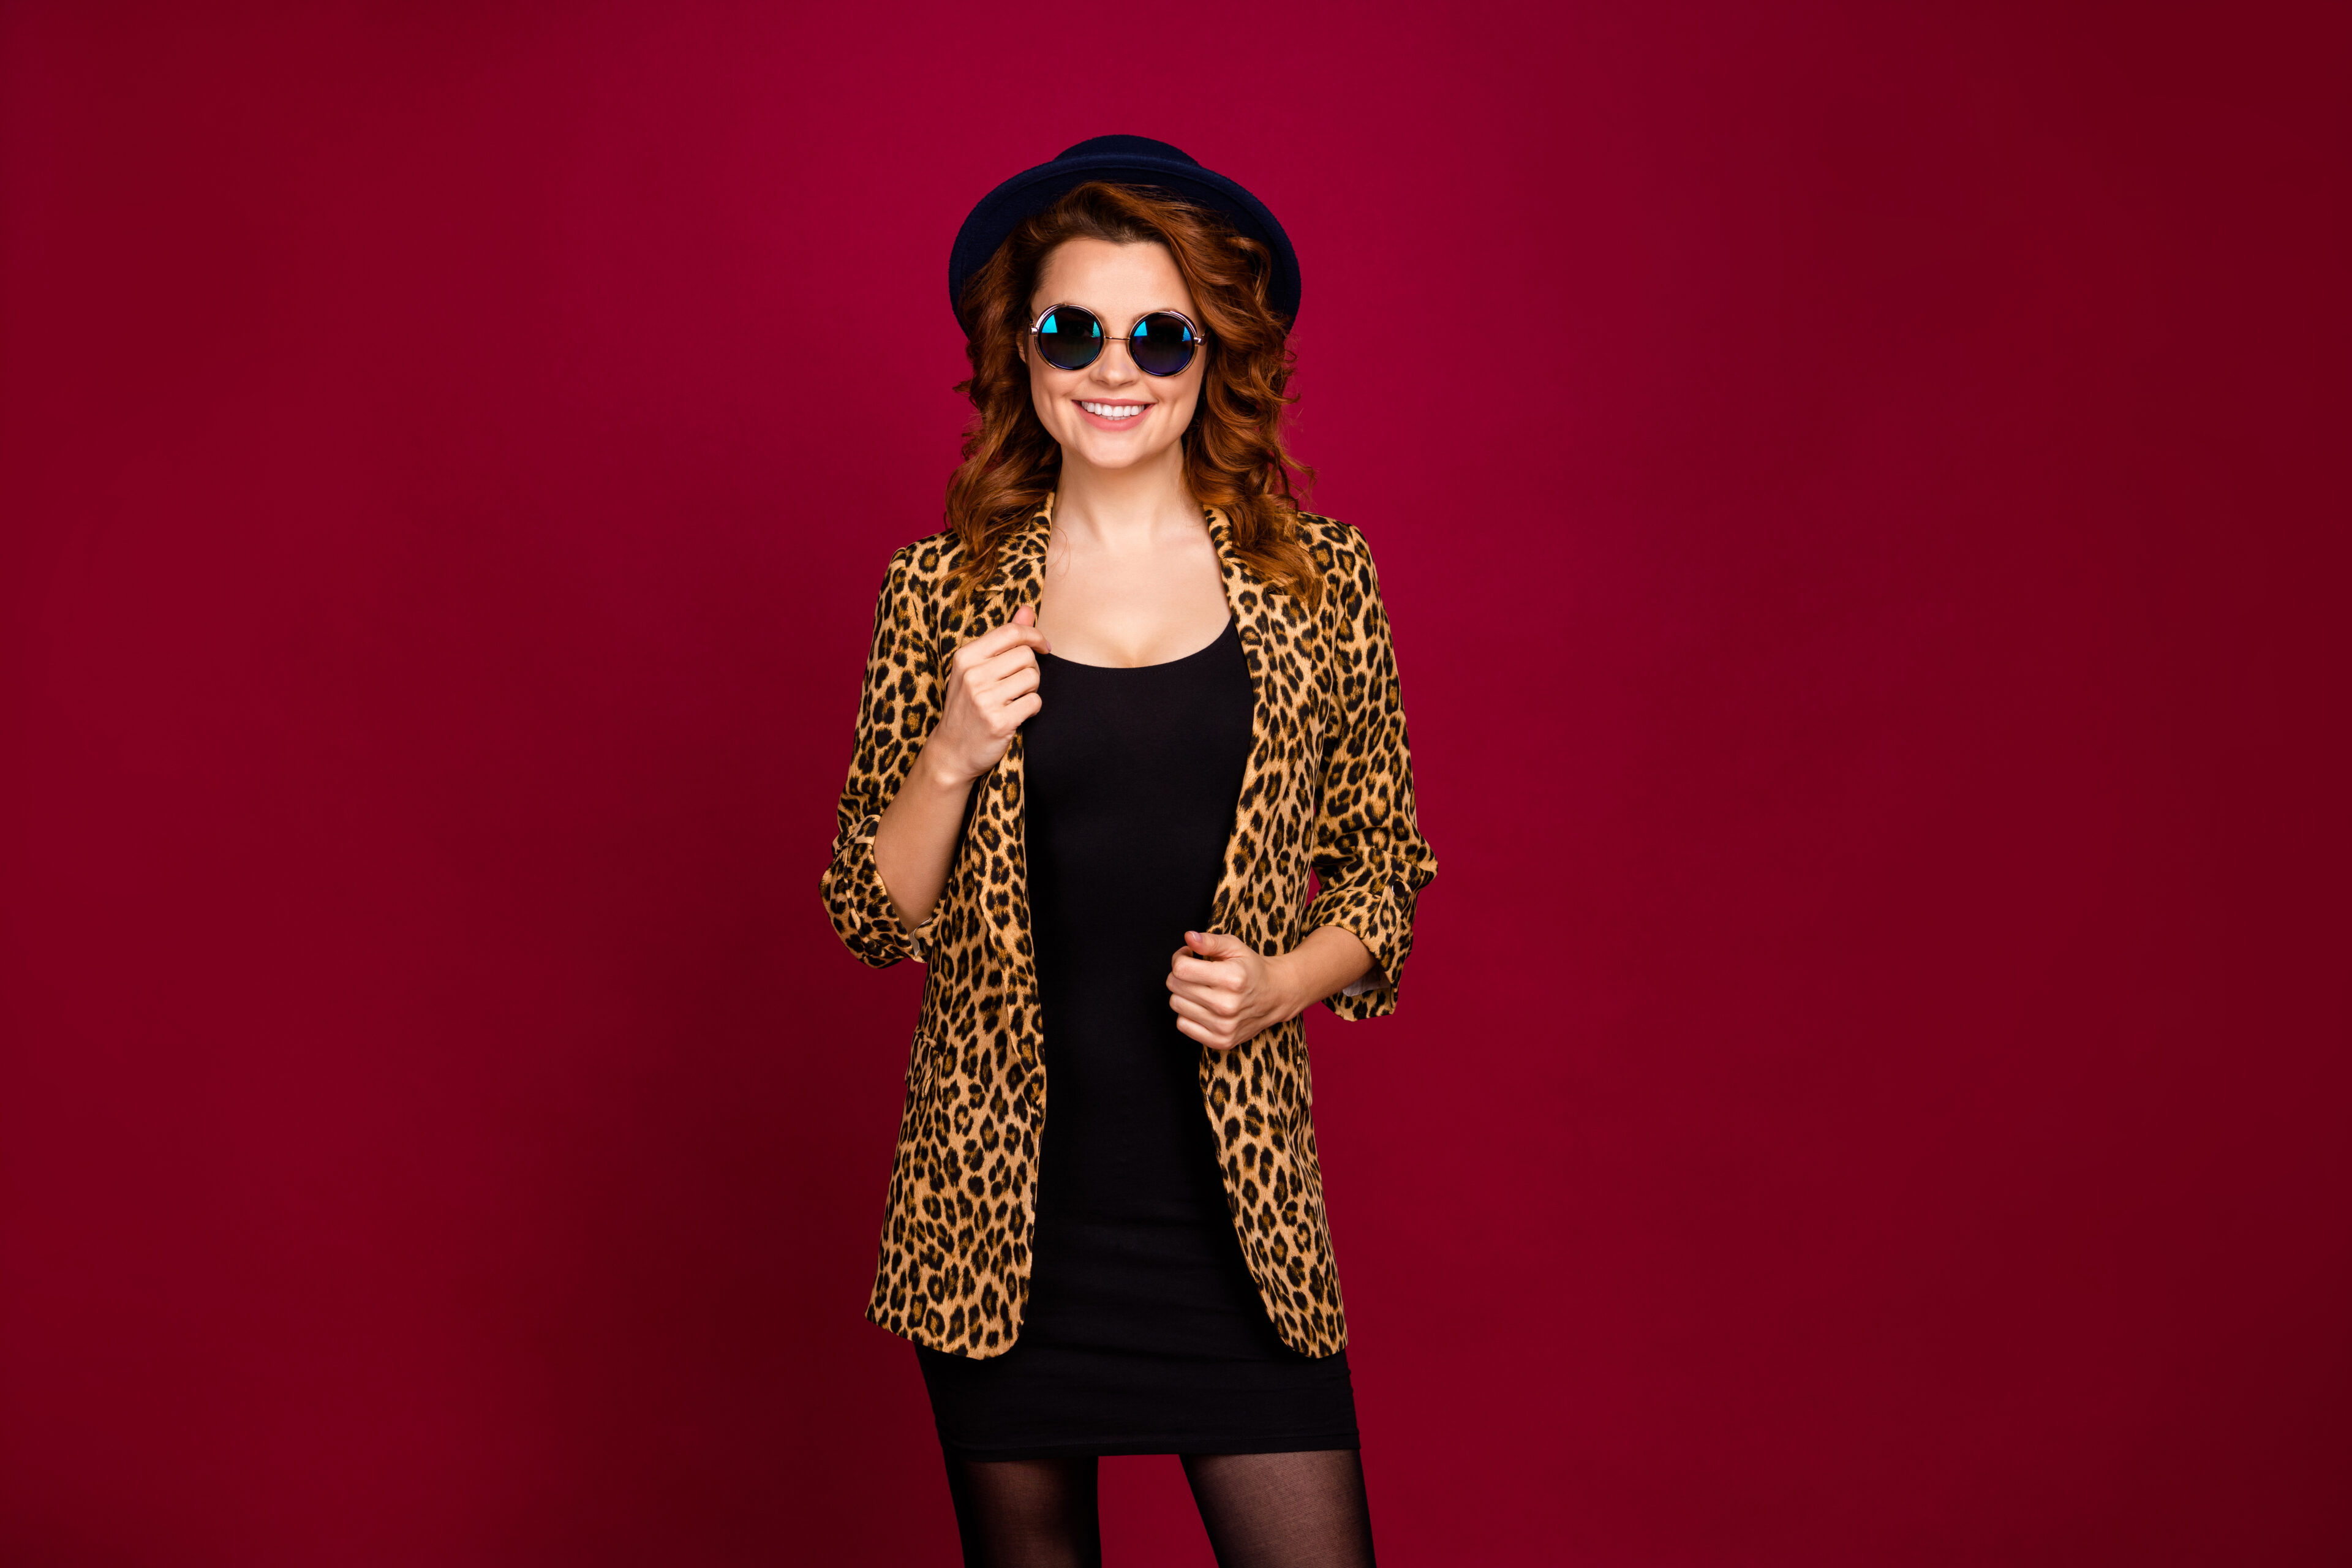  Cheetah Print Jacket & Black Dress